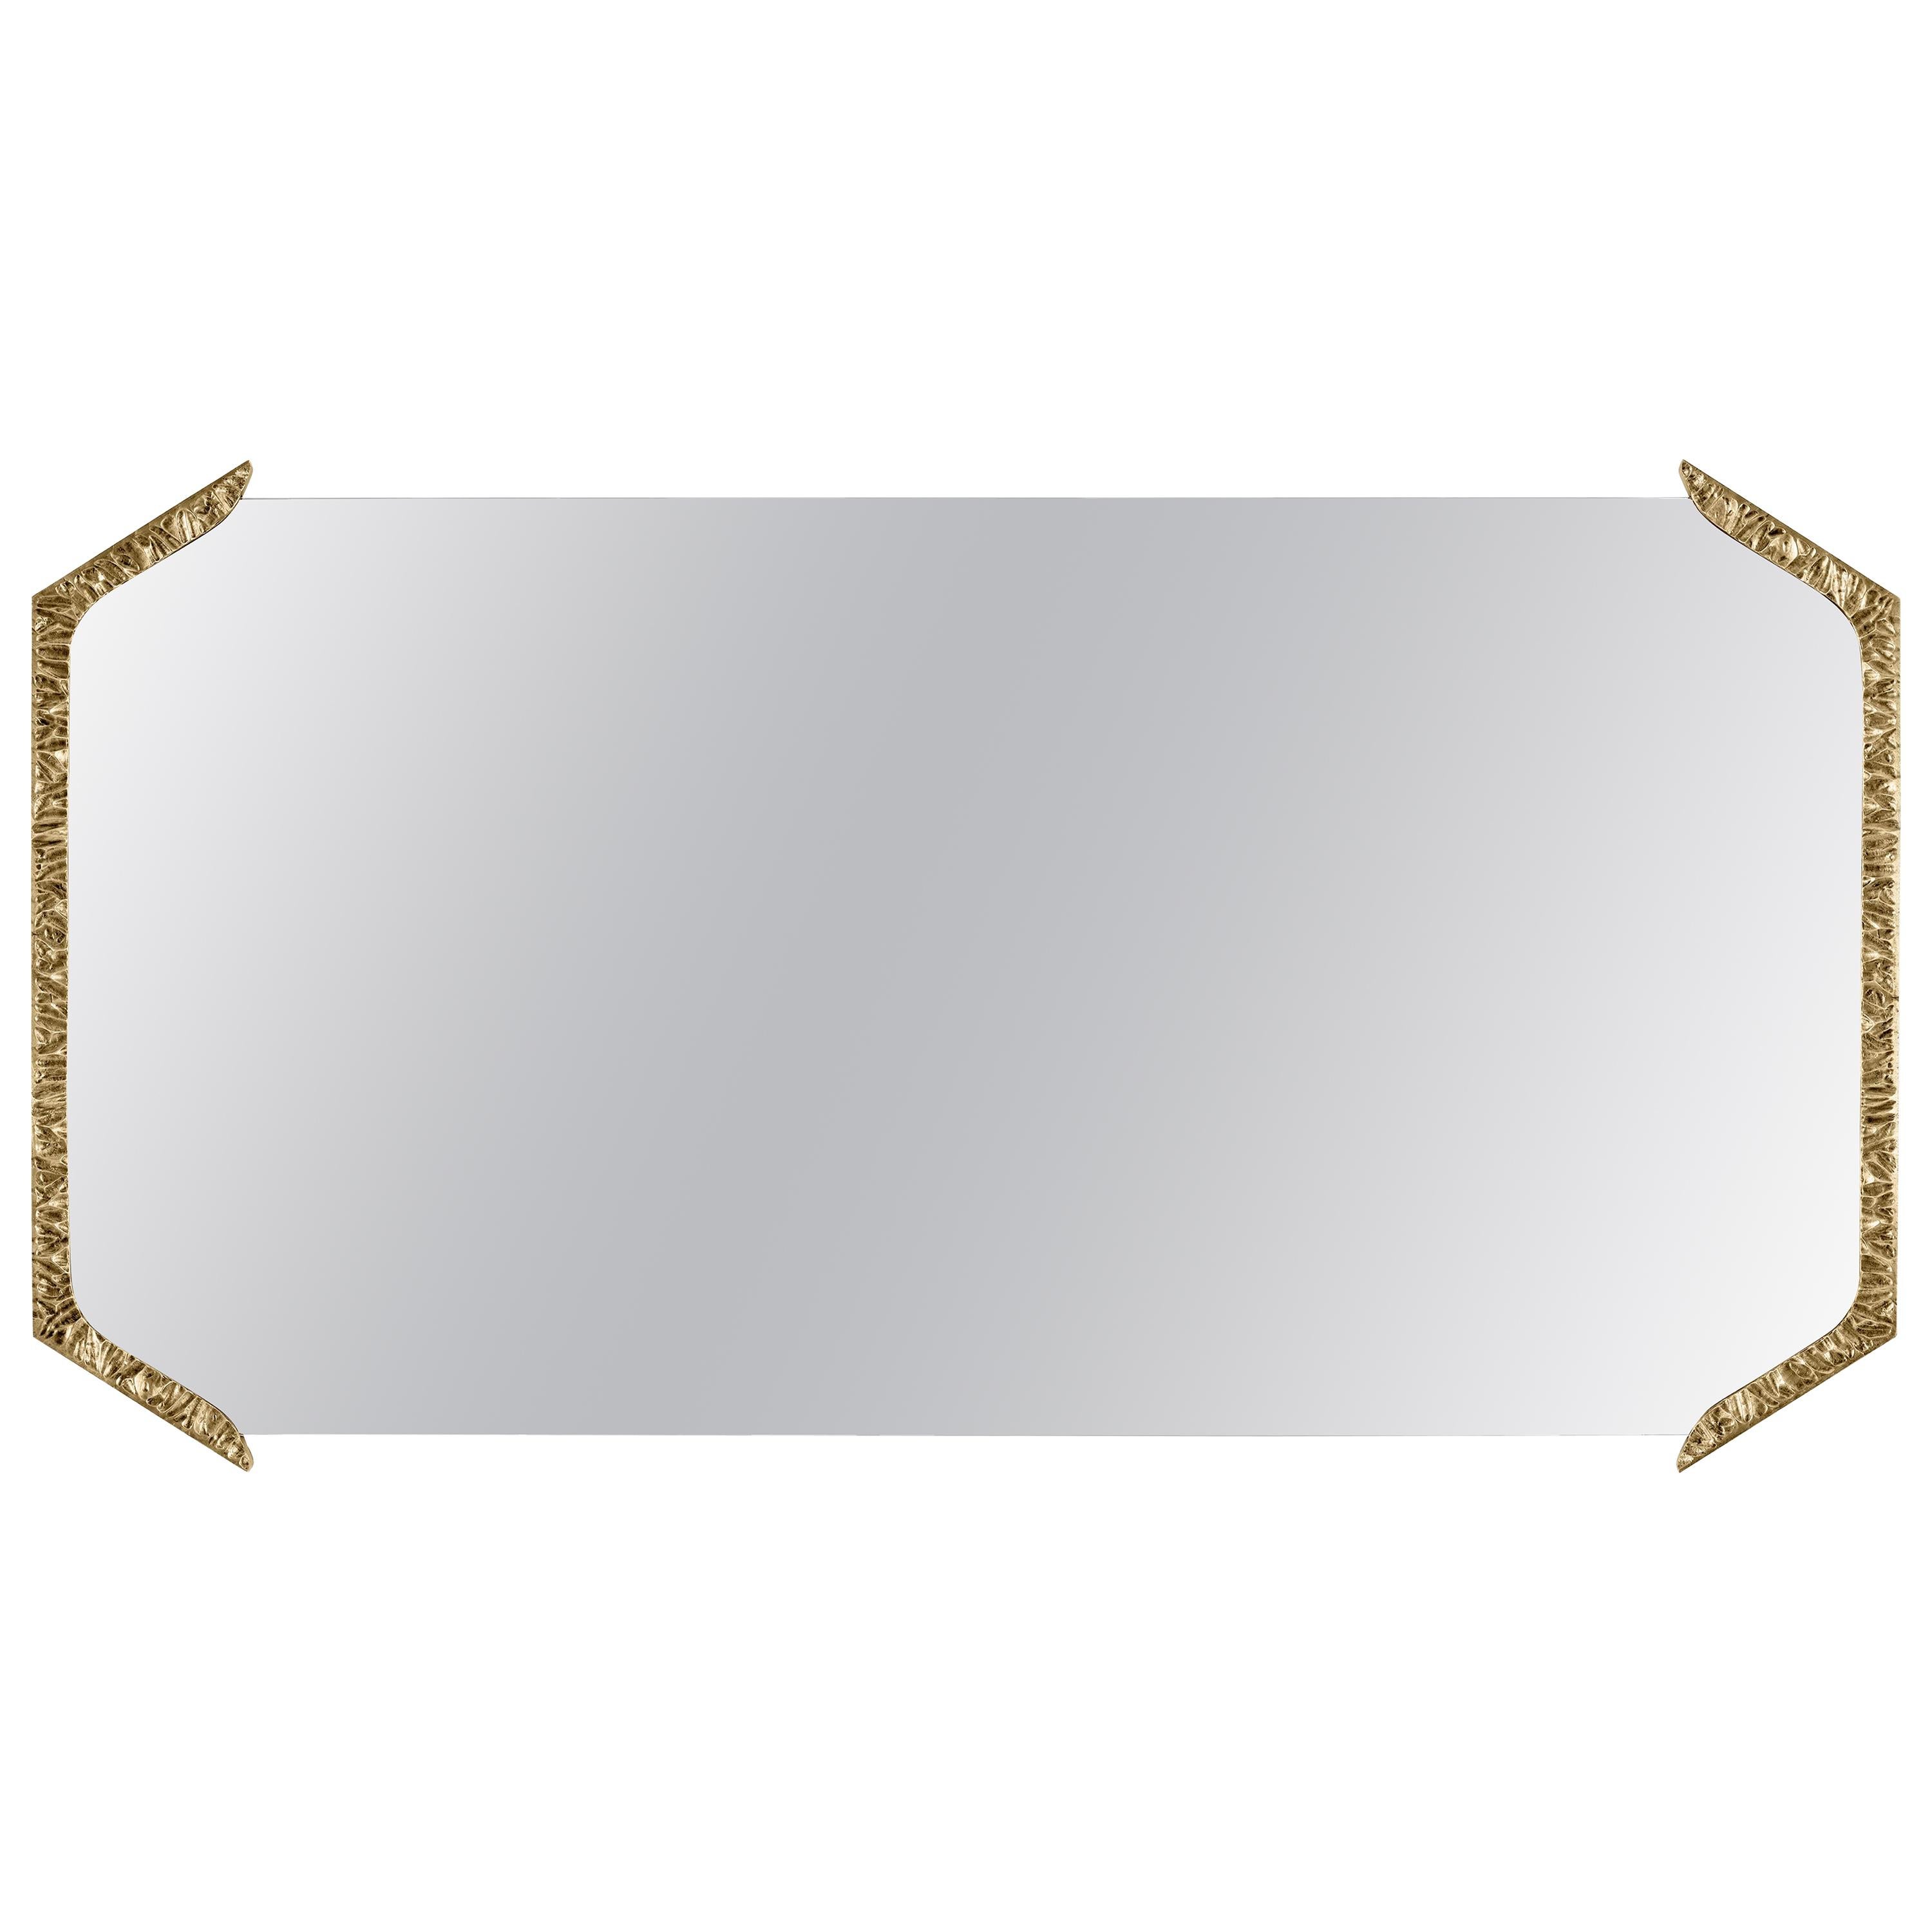 Alentejo Rectangular Mirror, Cast Brass, InsidherLand by Joana Santos Barbosa